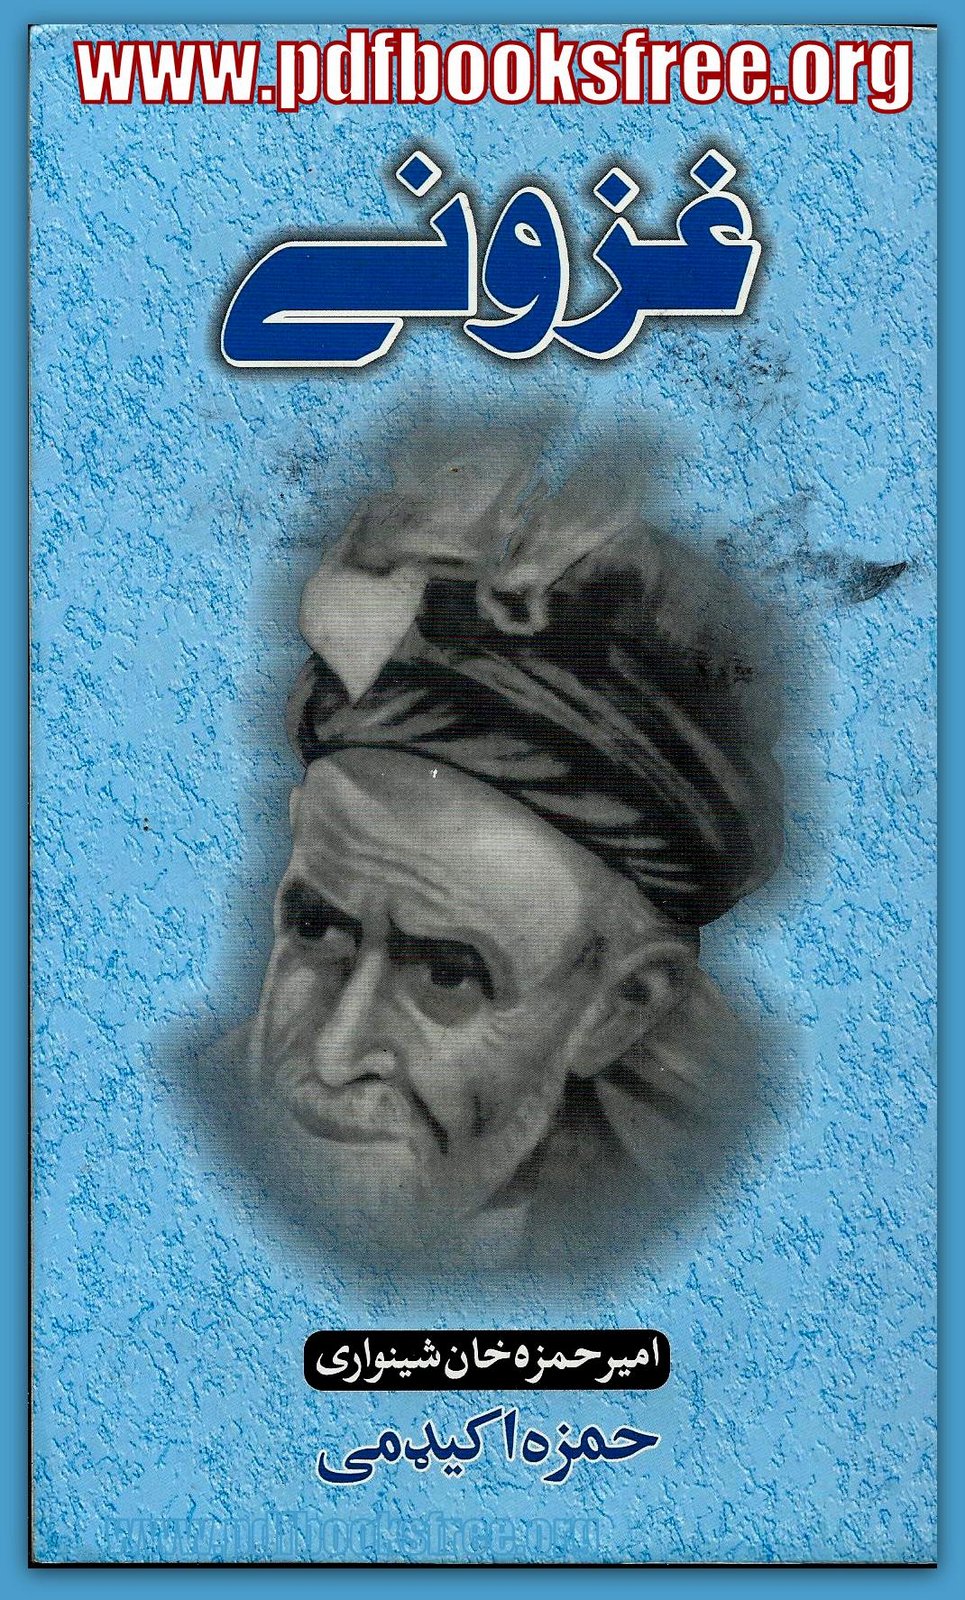 Ghazawane Pashto Poetry Book By Amir Hamza Baba Free Download - Free